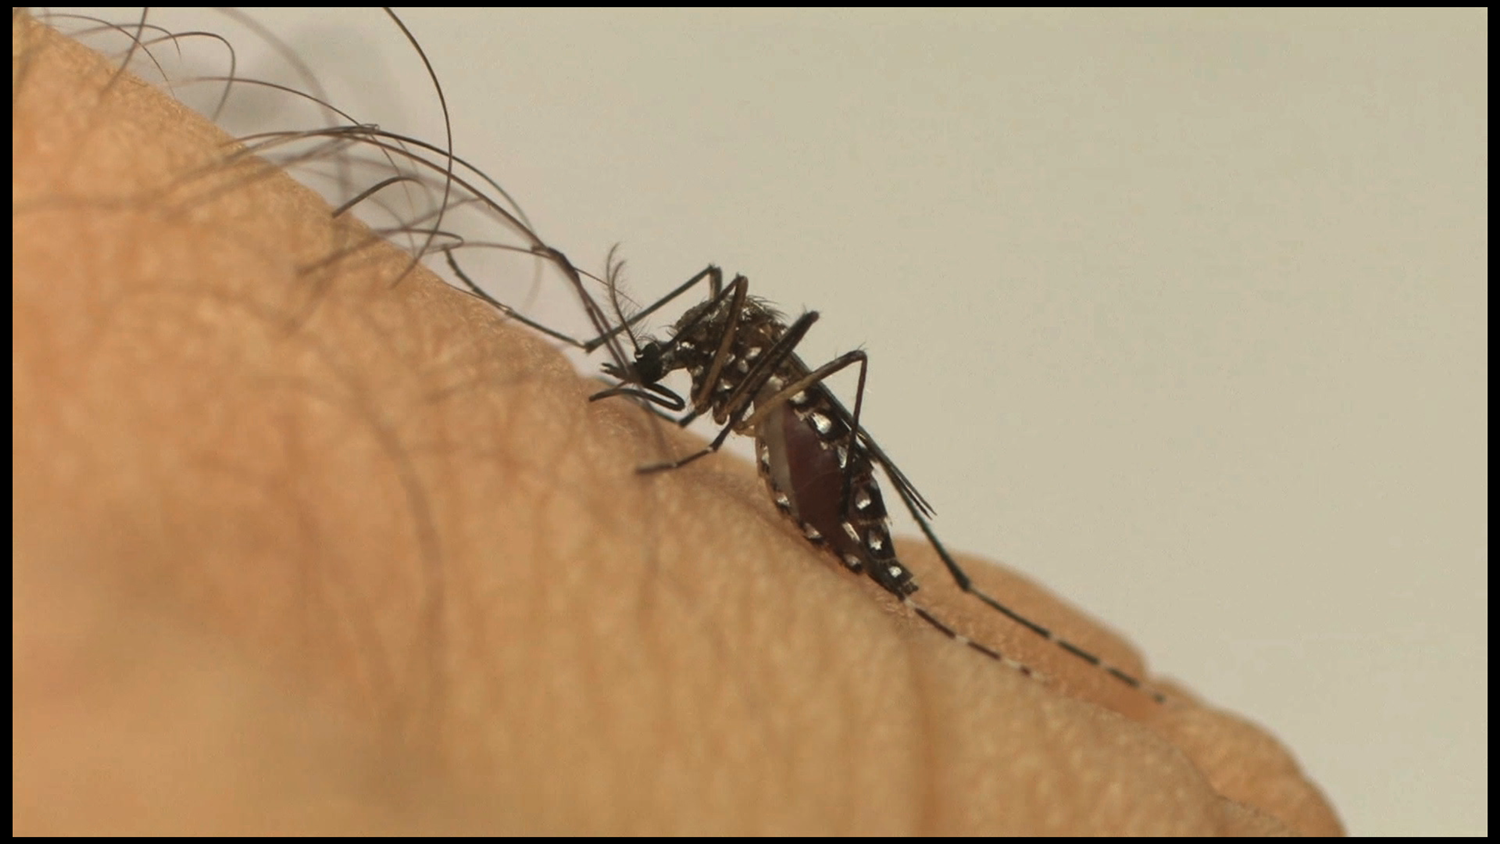 Mosquito transmissor da zika, dengue e chikungunya 